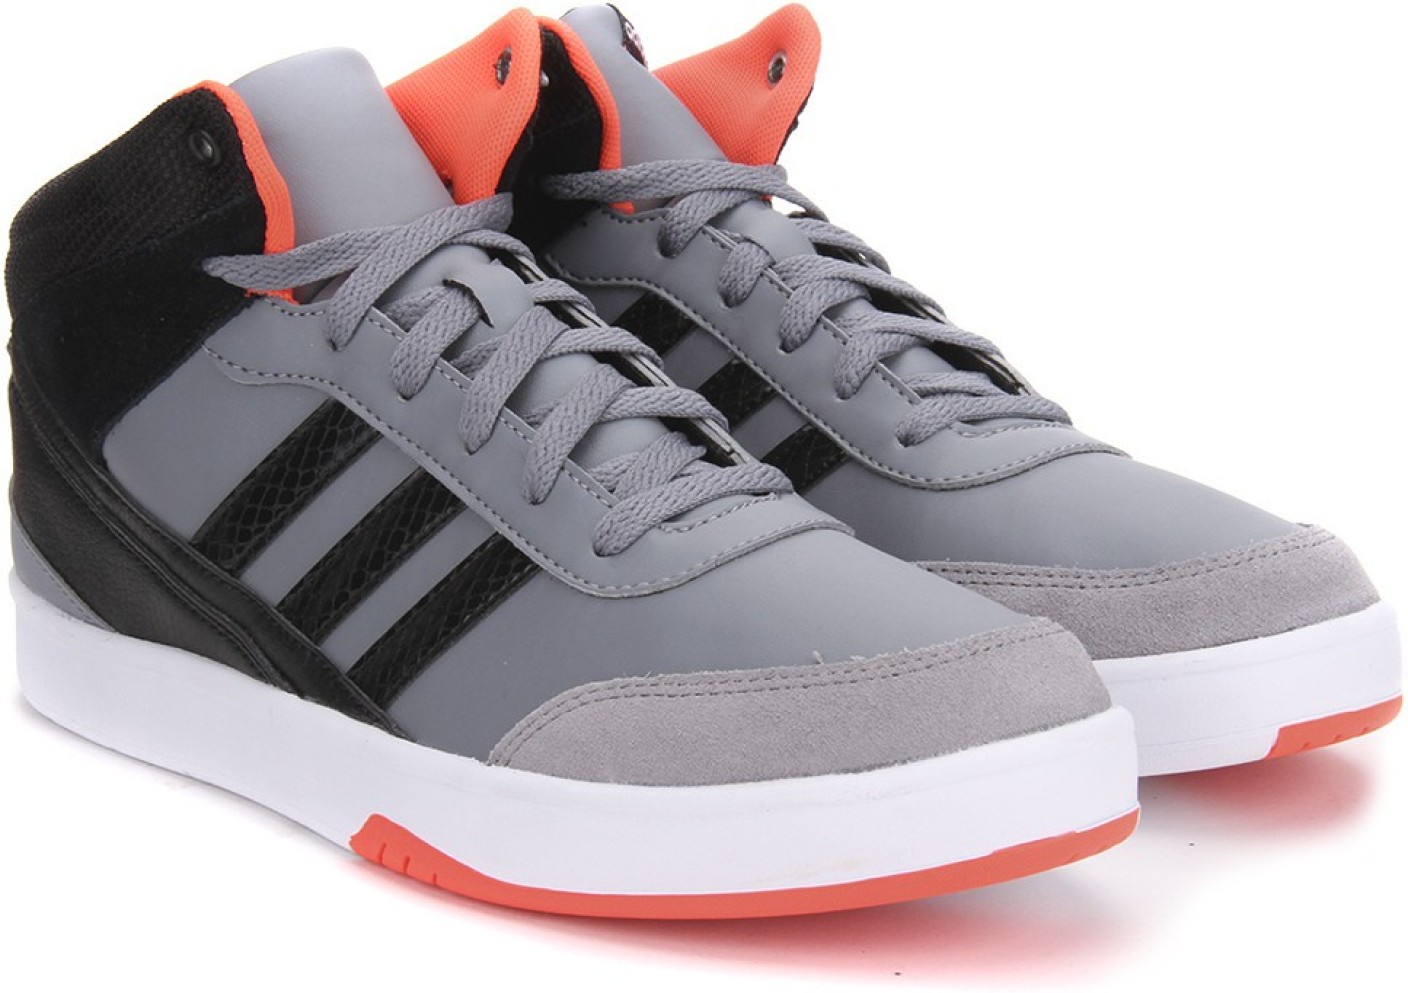 Adidas Neo PARK ST KFLIP MID Sneakers - Buy GREY/CBLACK/SOLRED Color Adidas Neo PARK ...